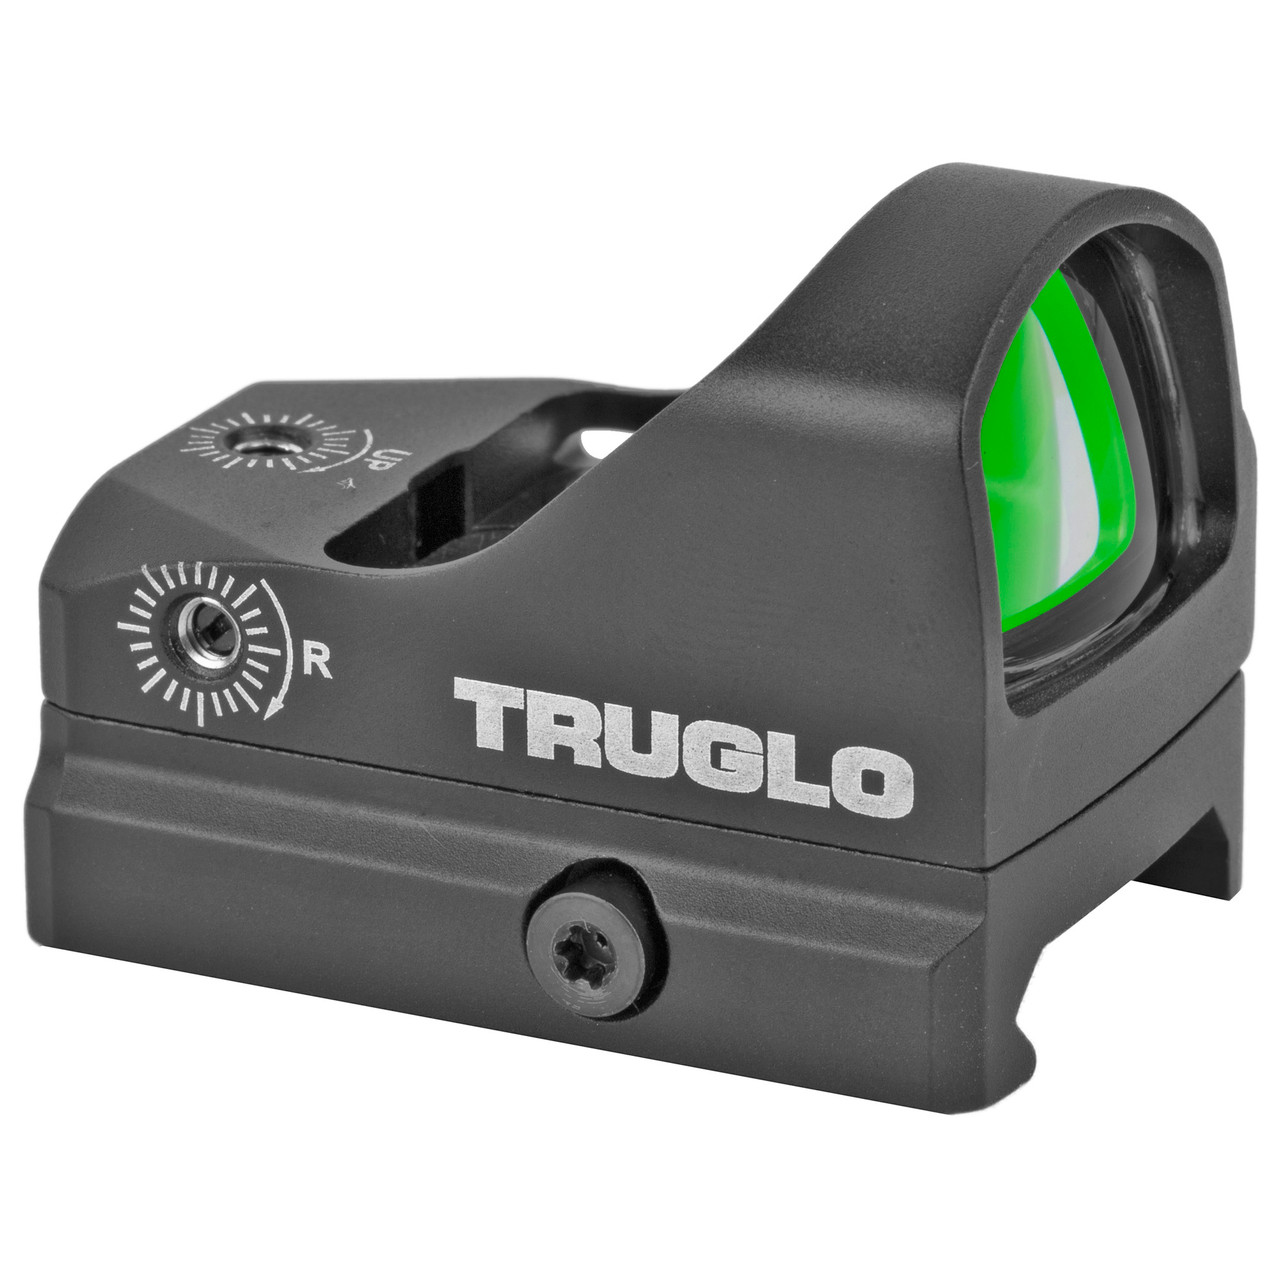 Postgrado  Original TRUGLO TRU-TEC 3 MOA Red Dot Sight Open Reflex Optic  RMR & Picatinny